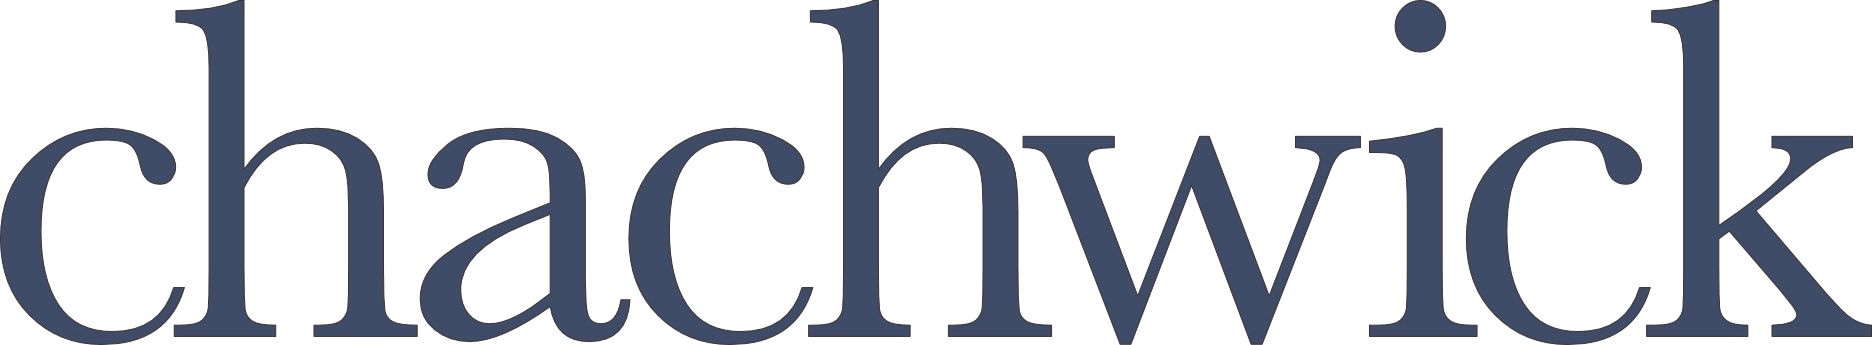 Chachwick Creativity Co Logo - TextOnly